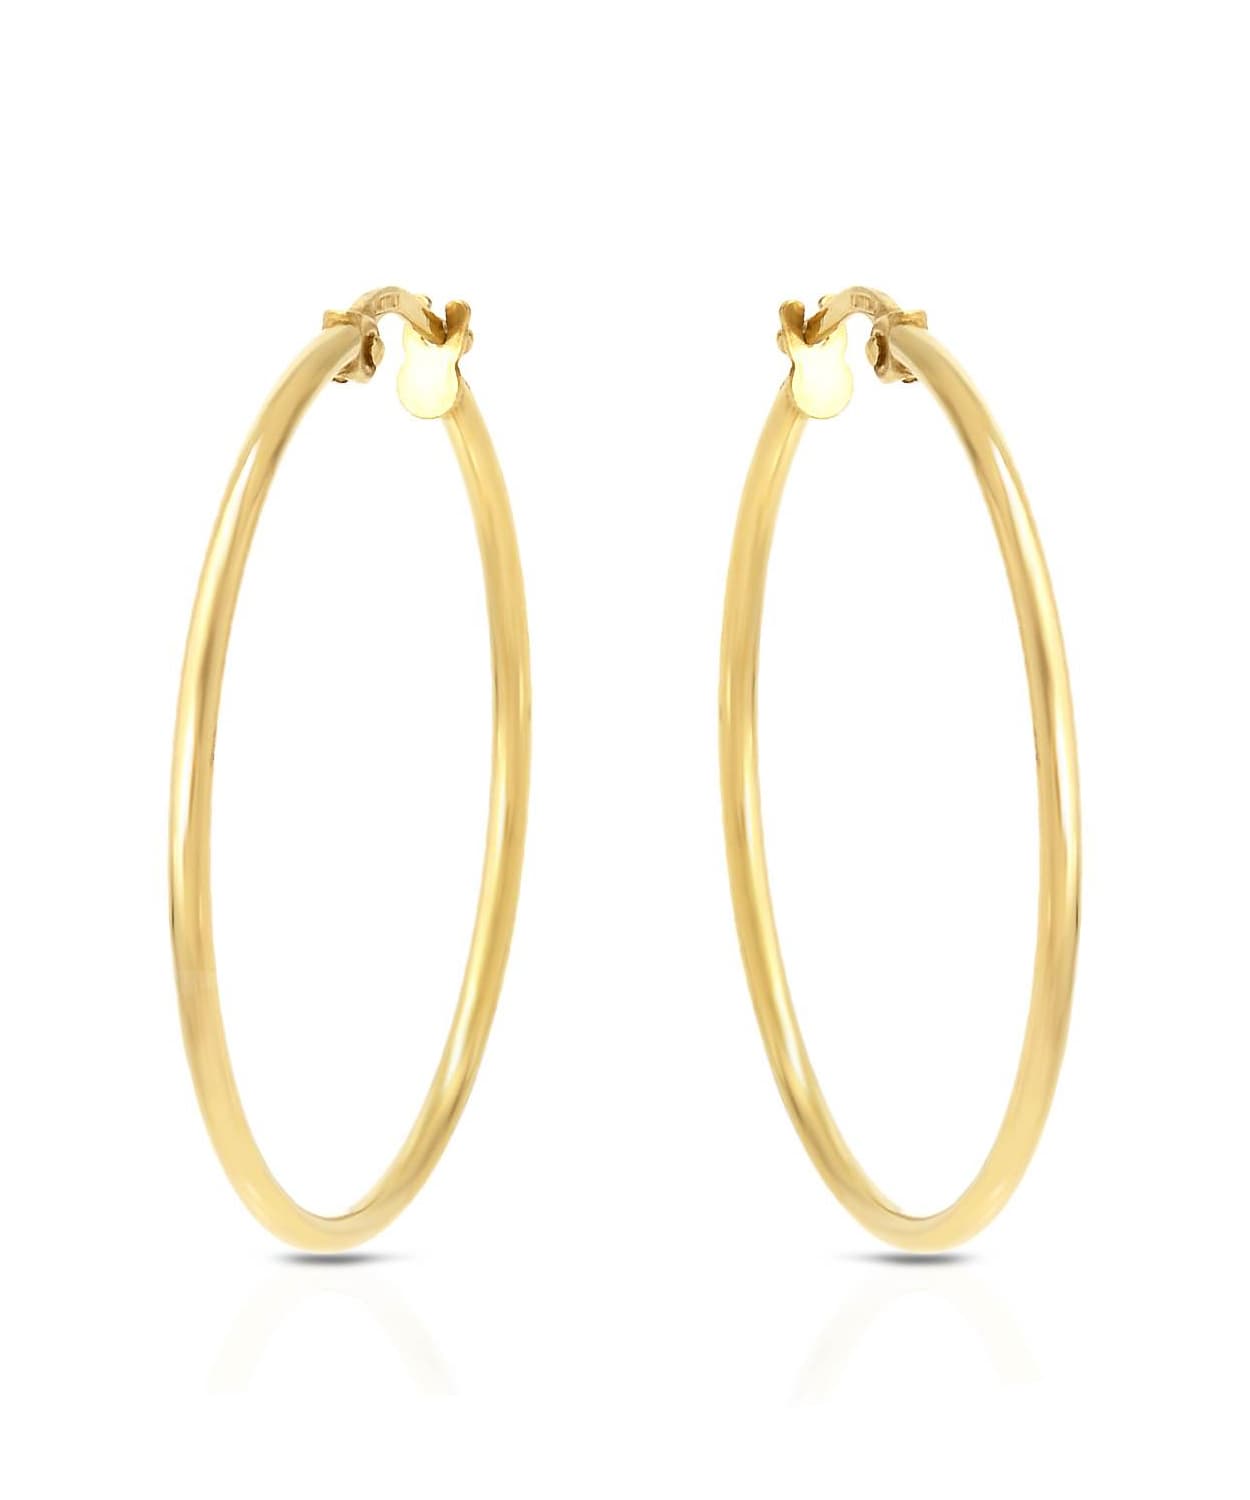 14k yellow Gold Dainty Hoop Earrings View 1